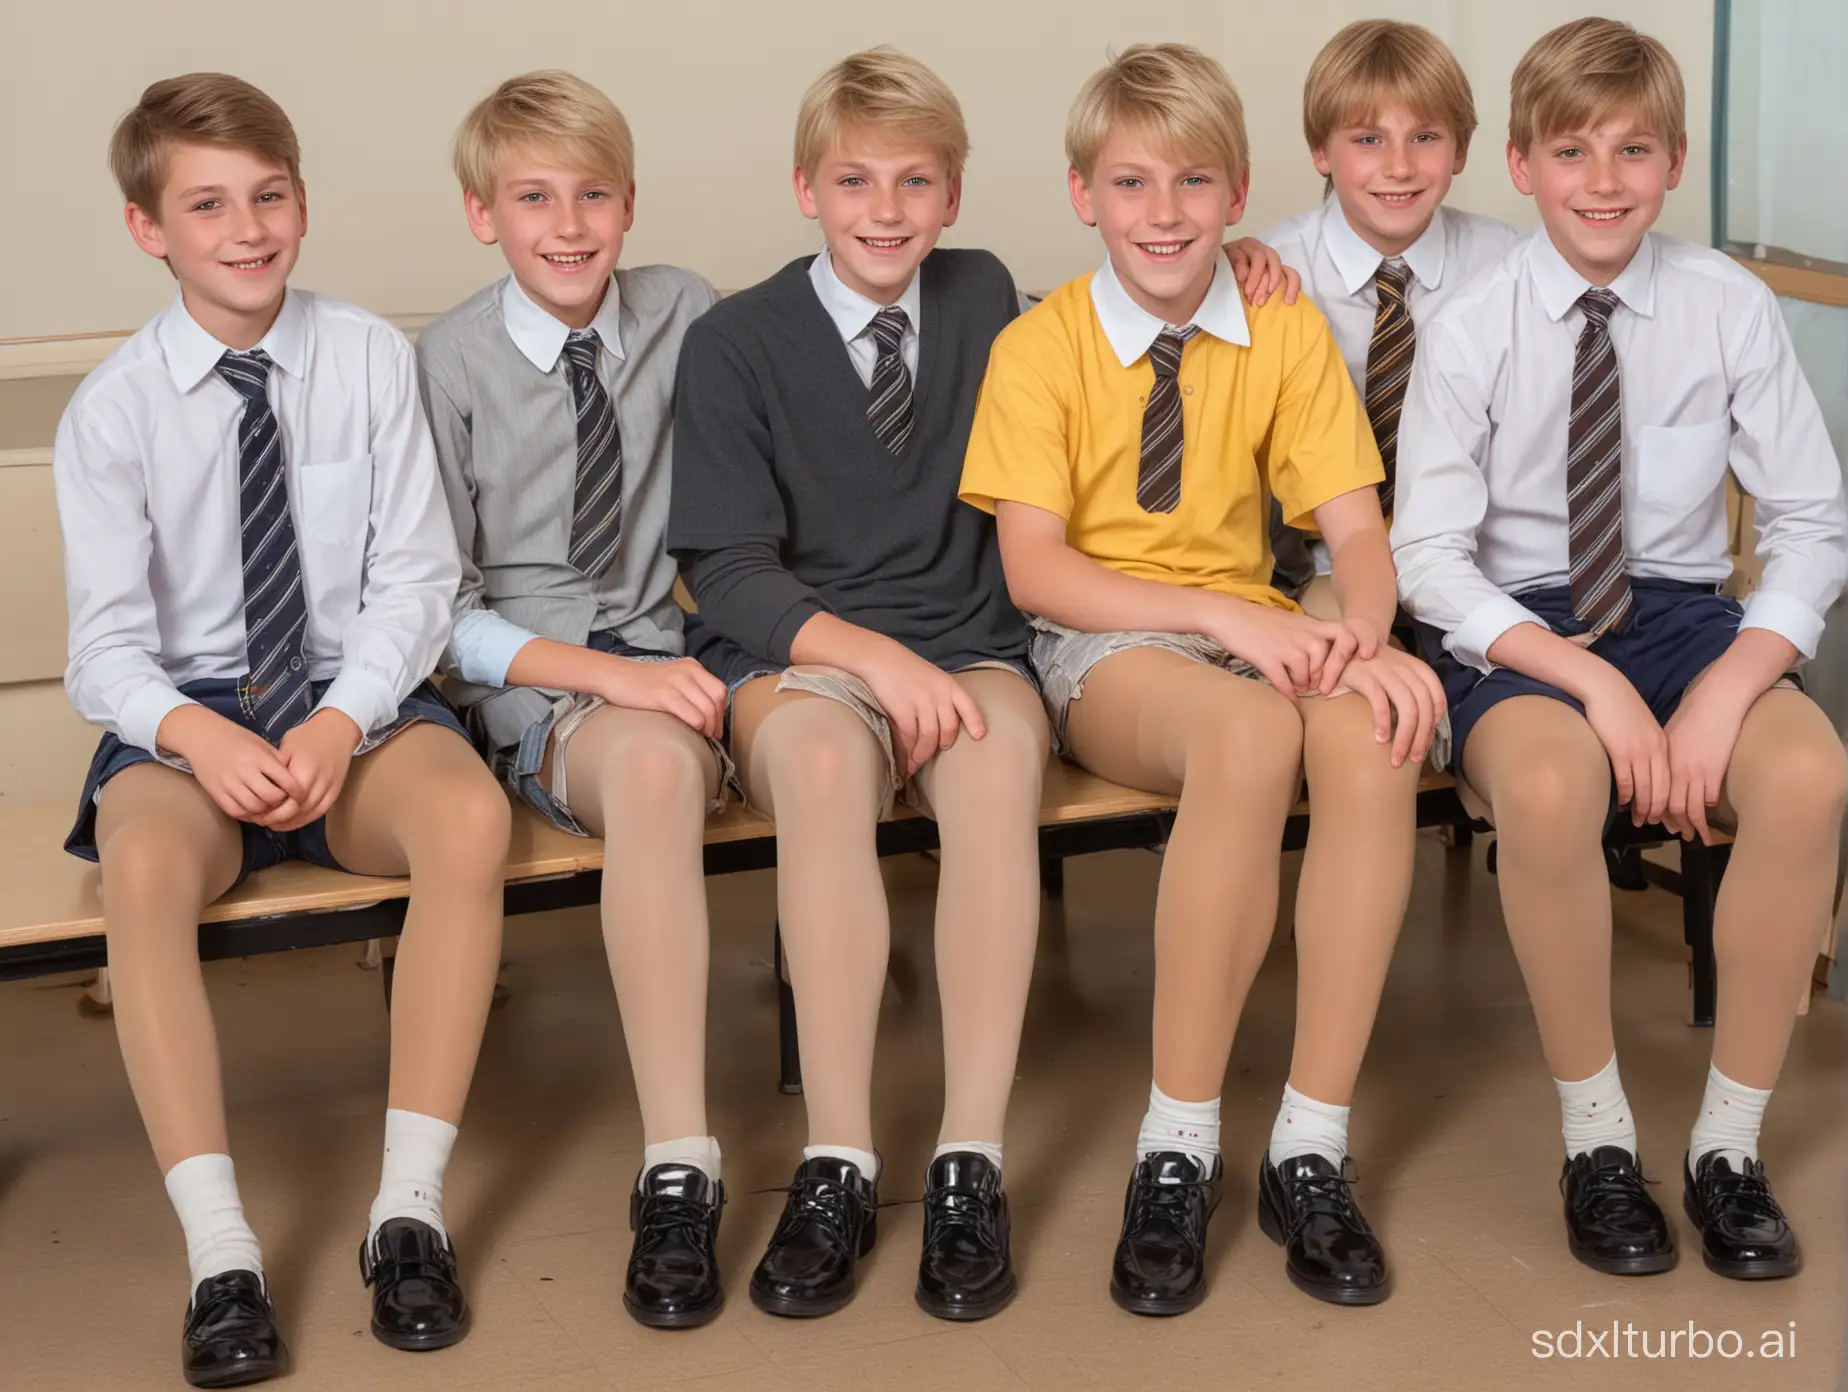 Cheerful-Blonde-Boys-in-Classroom-Setting